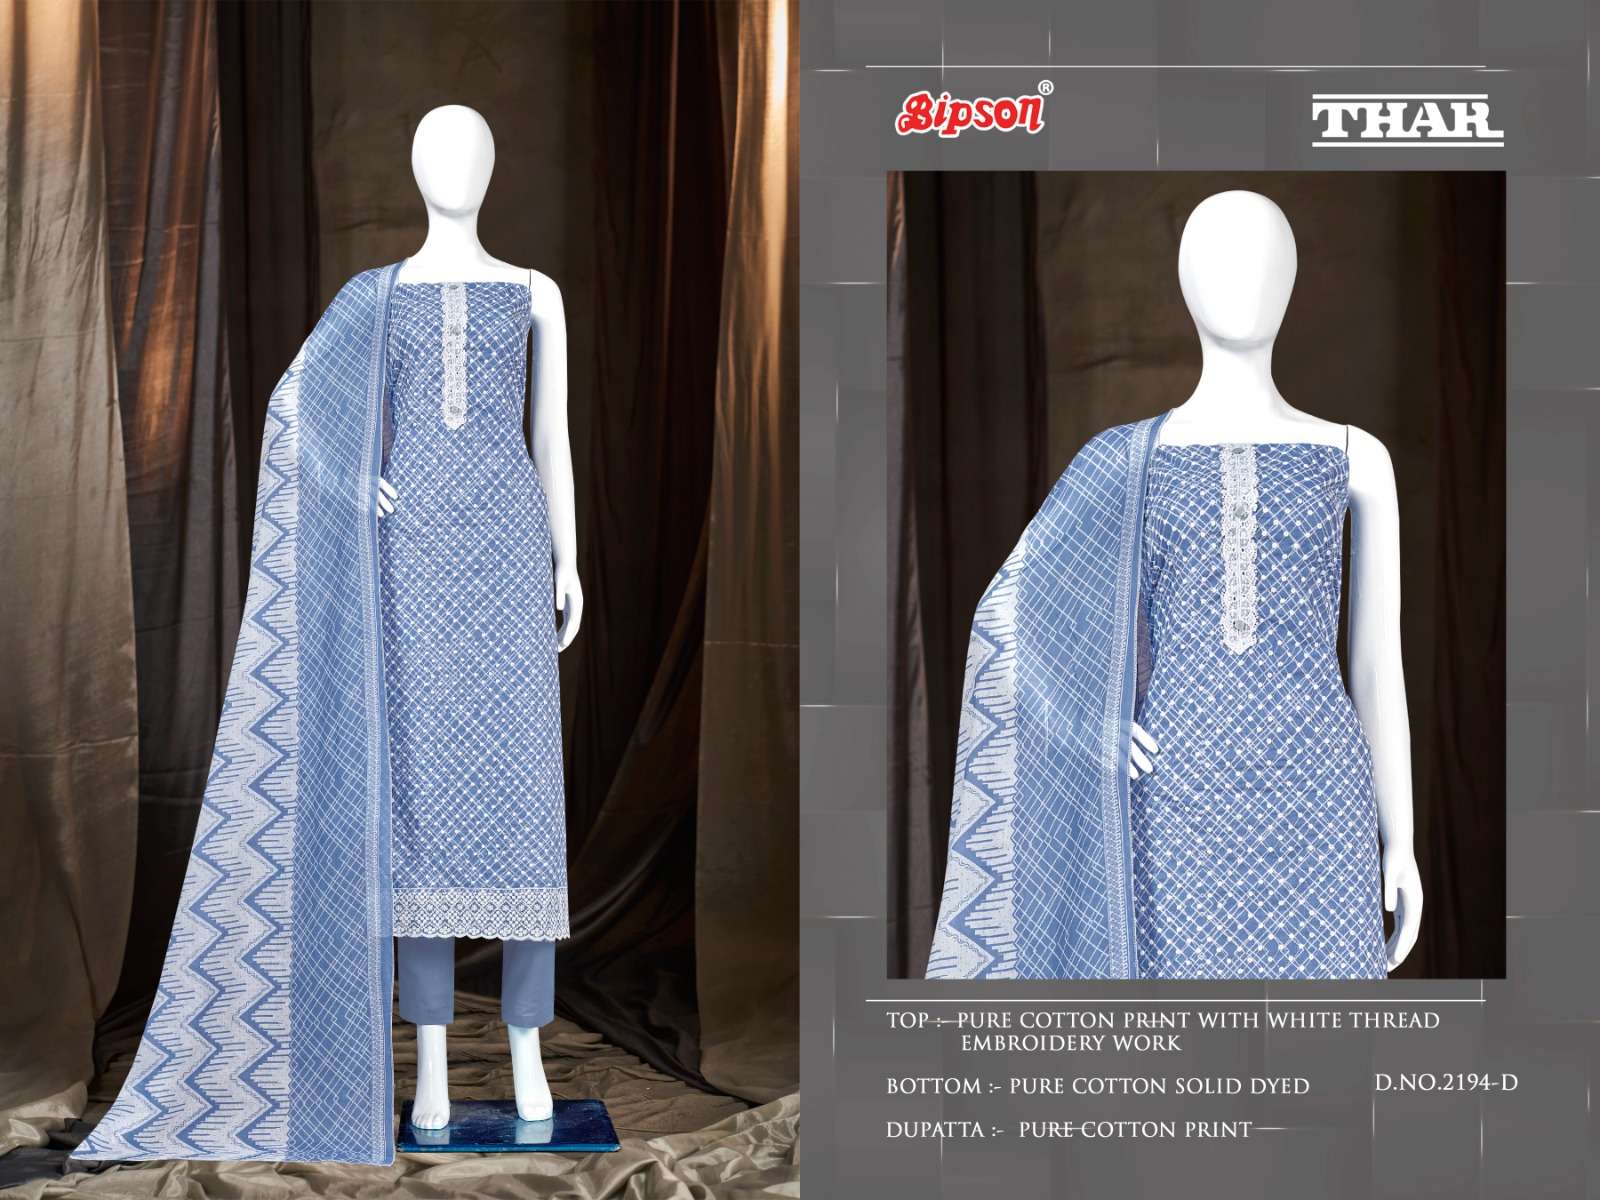 bipson prints thar 2194 series trendy designer salwar kameez catalogue online price surat 